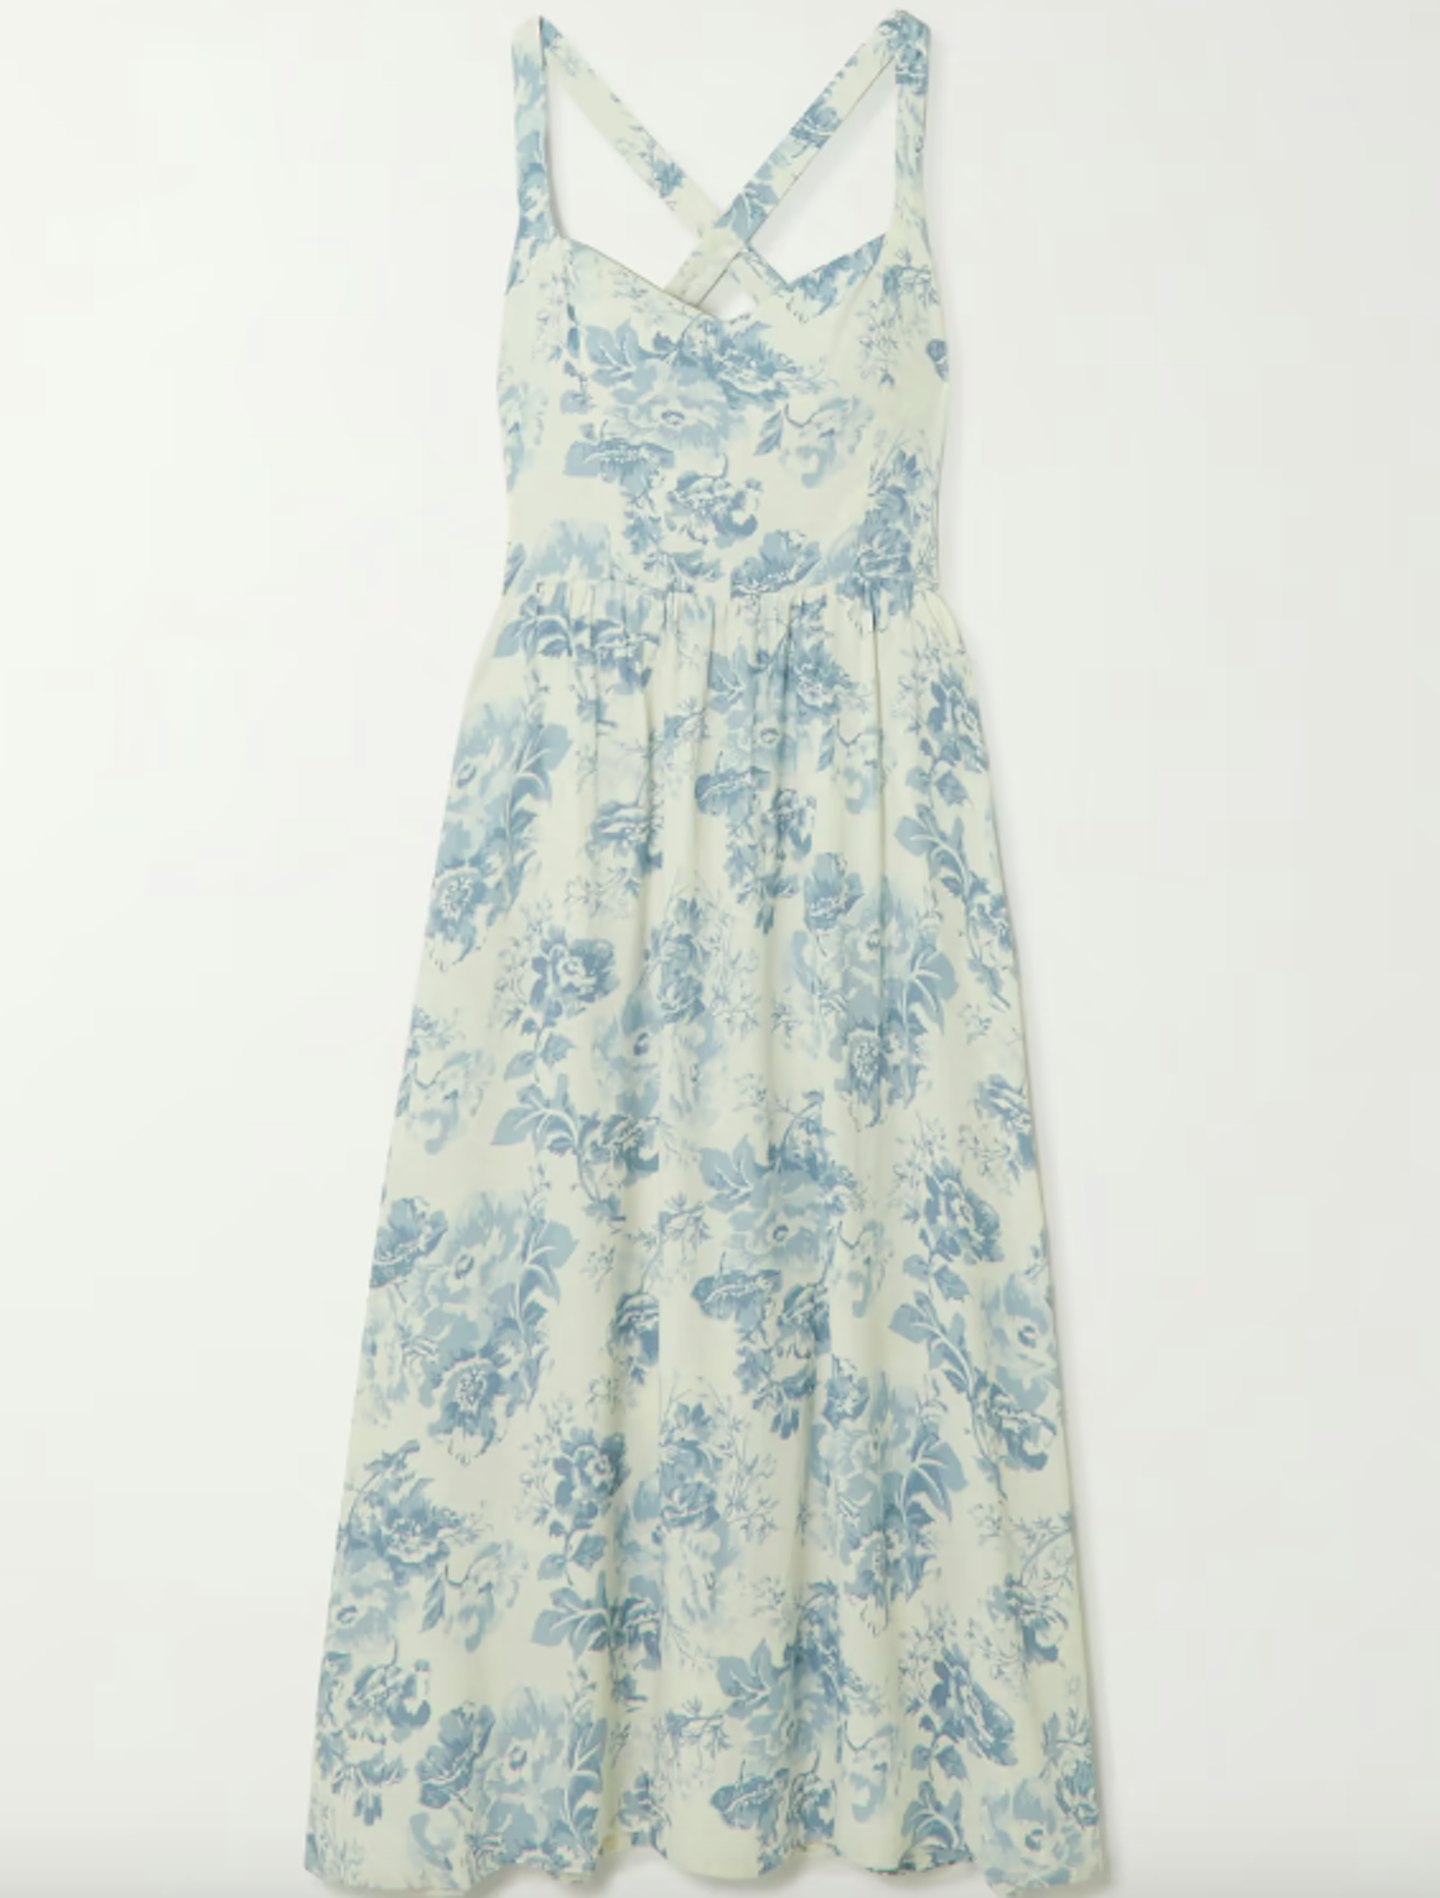 Reformation, Brixton Shirred Floral-Print Crepe Midi Dress